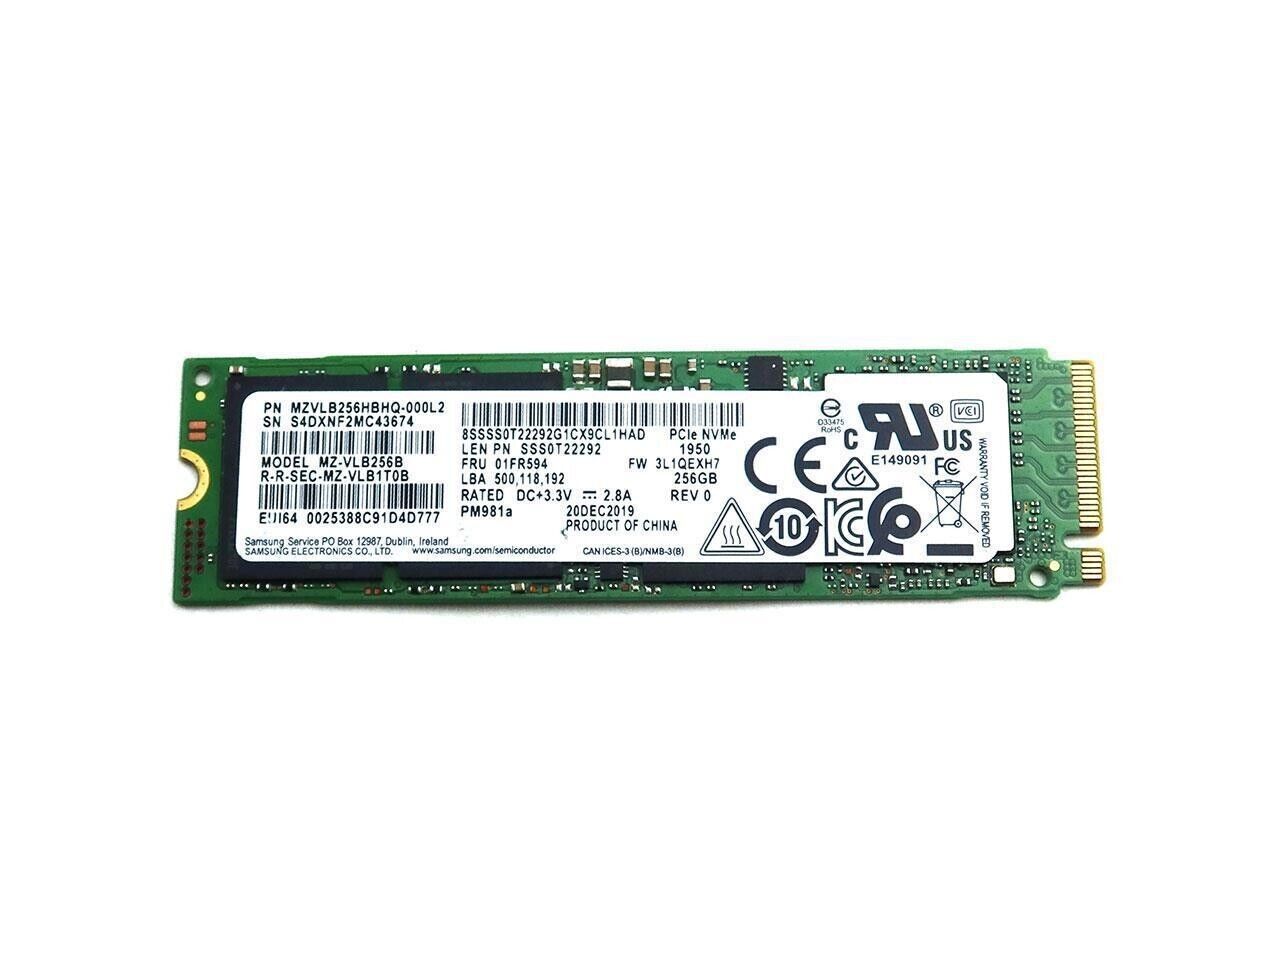 ✔️ SAMSUNG 256GB PM981a NVME M.2 PCIE SSD HP L50351-001 MZ-VLB256B US SELLER